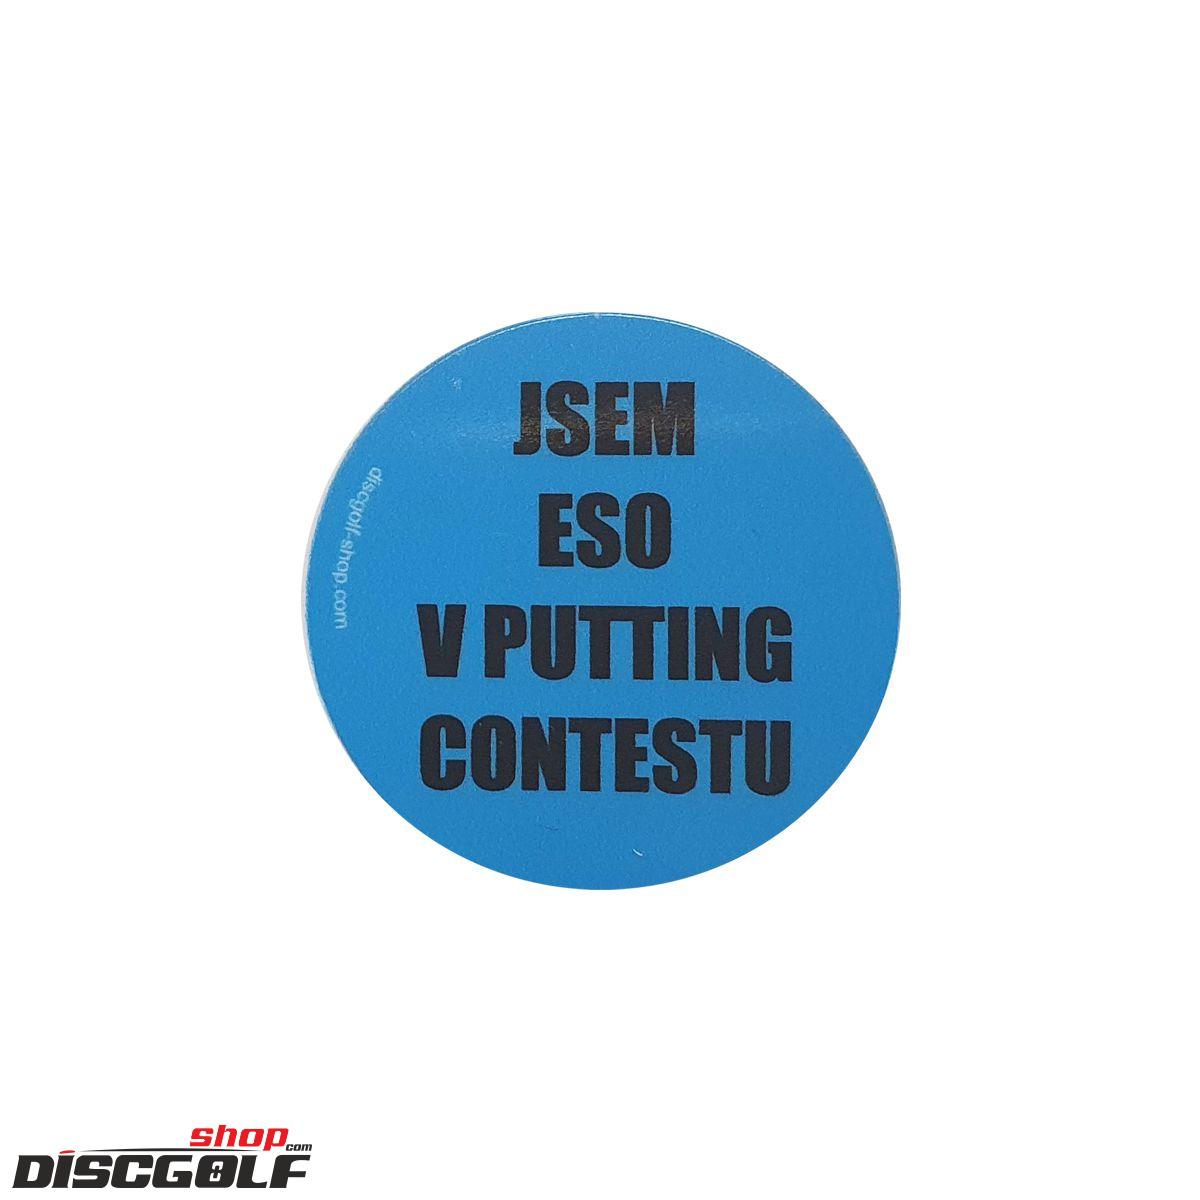 Samolepka "Jsem eso v putting contestu" (discgolf)